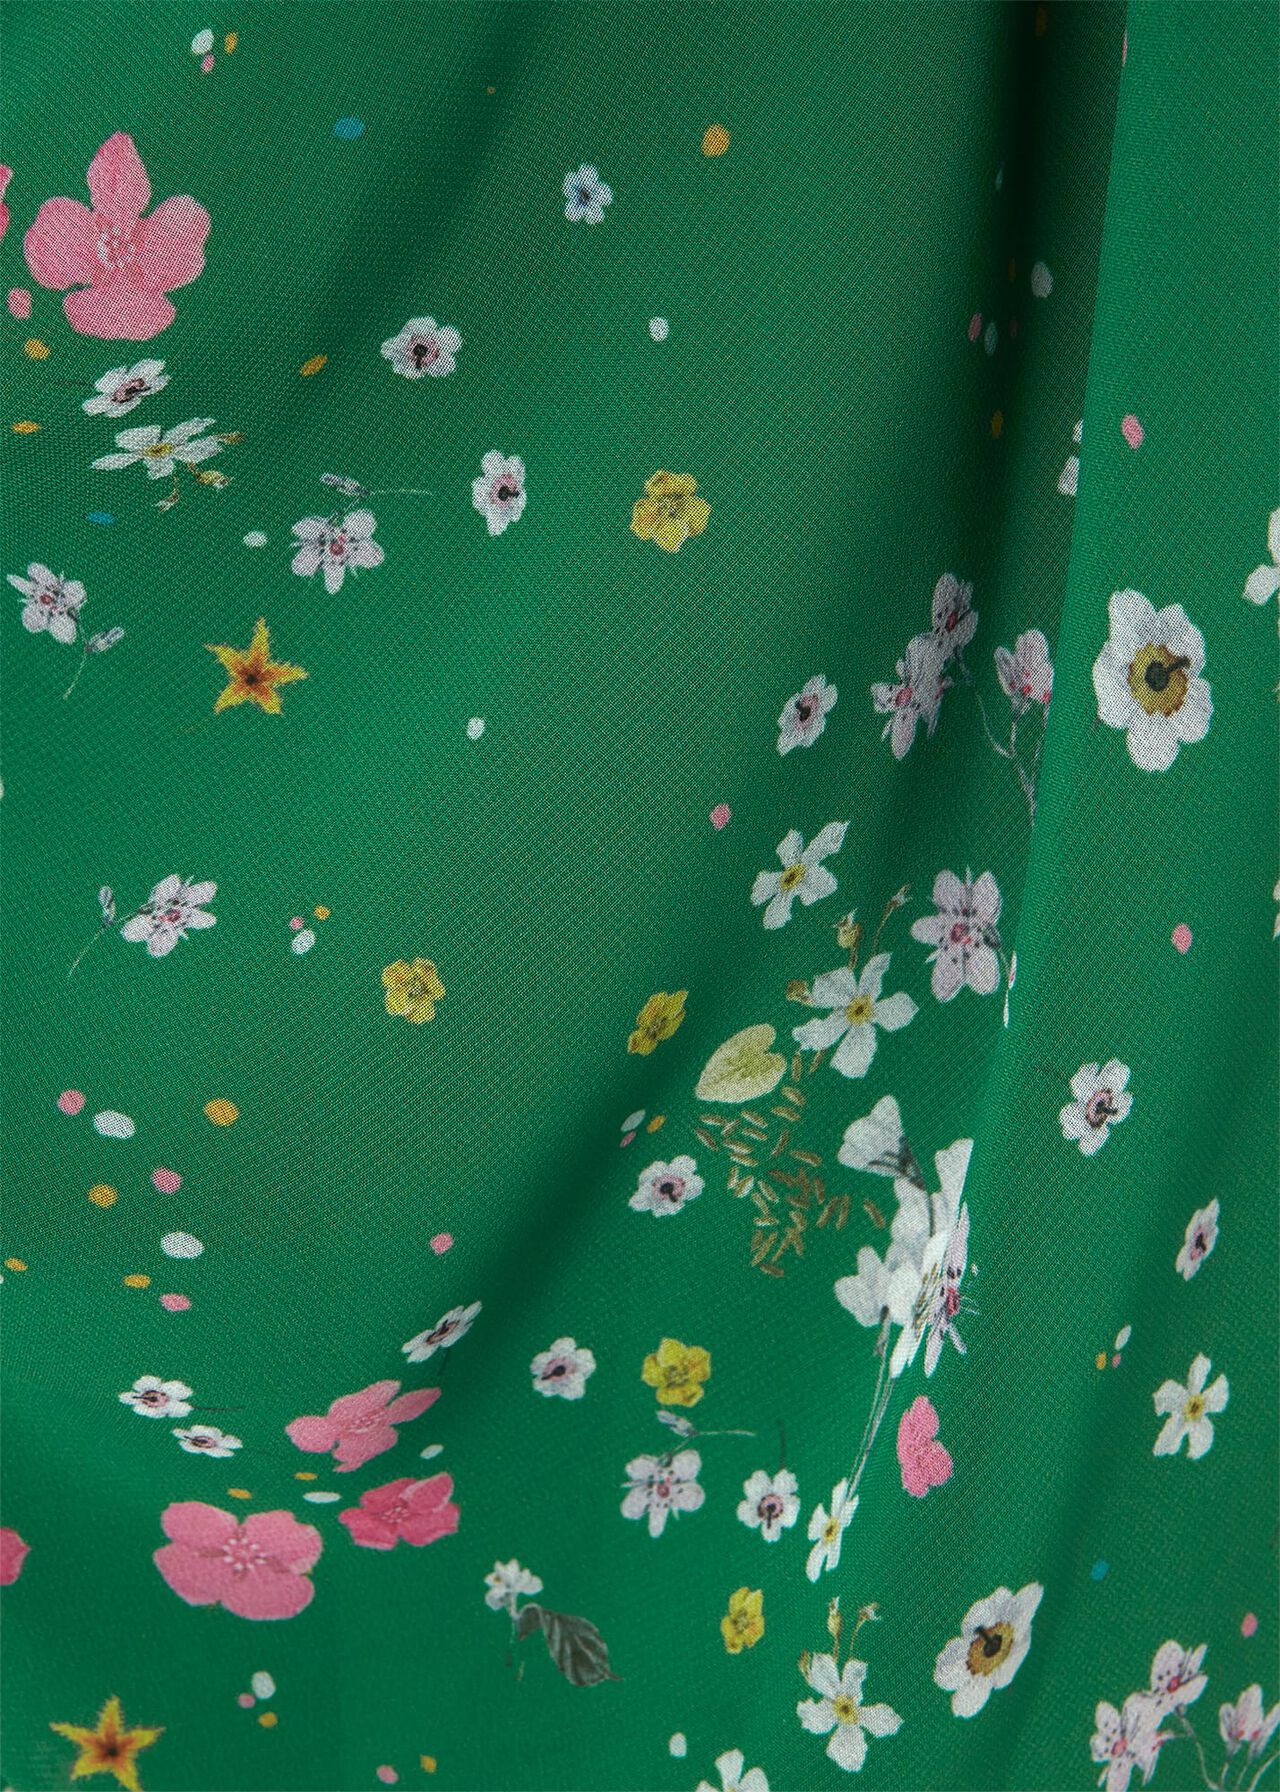 Petite Maria Floral Dress, Green Multi, hi-res